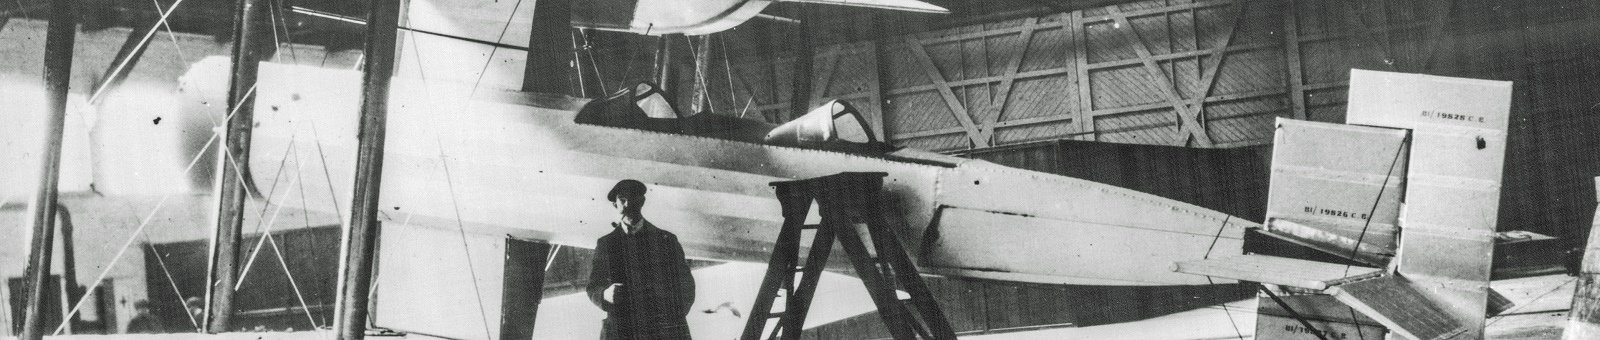 Bristol Type 92 Laboratory Biplane